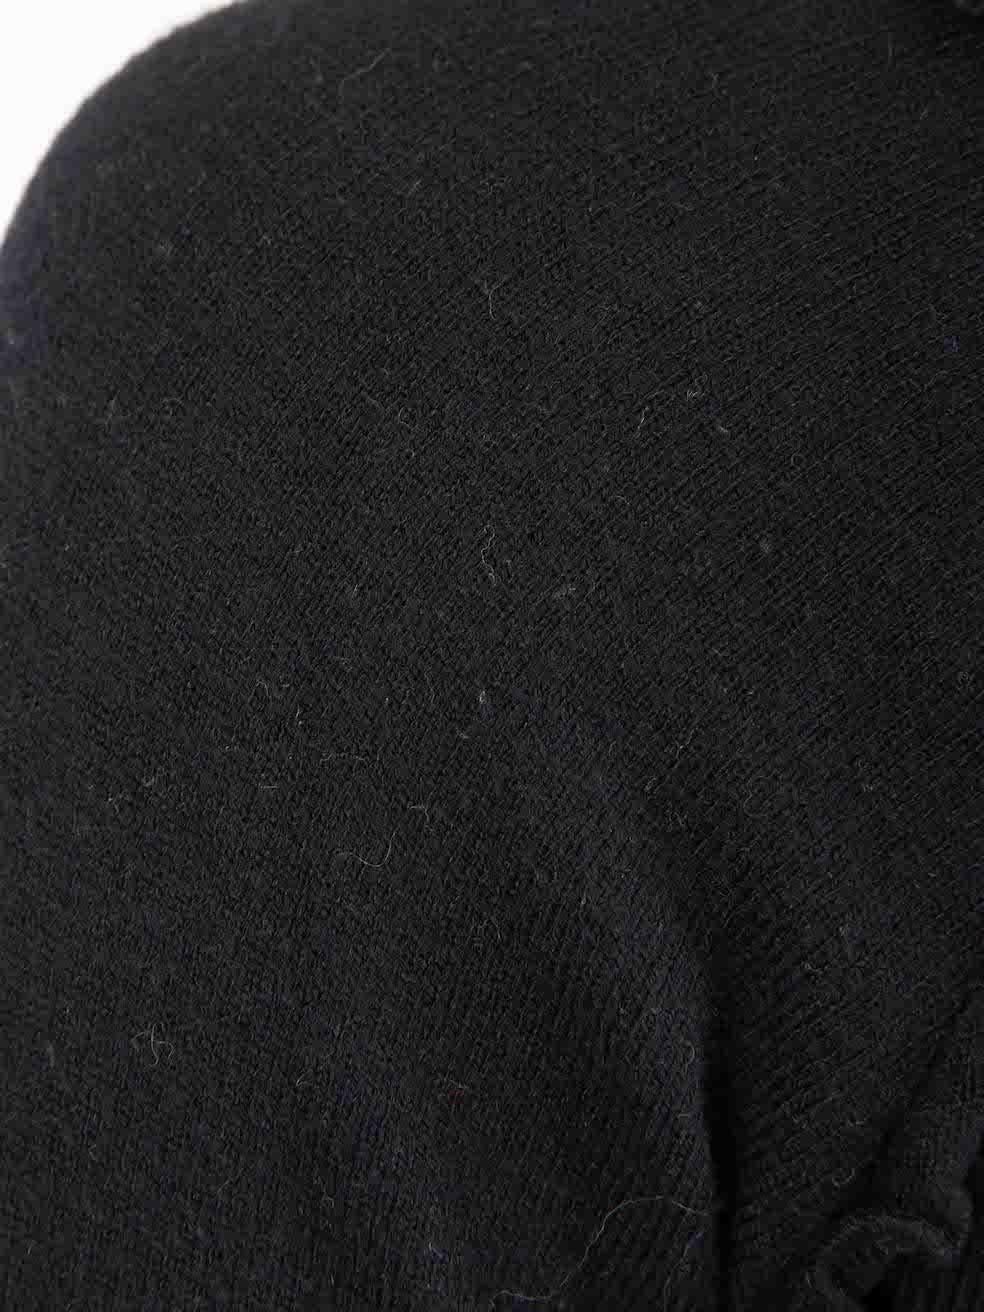 Women's Jasmine Di Milo Vintage Black Ruffle Knit Dress Size S